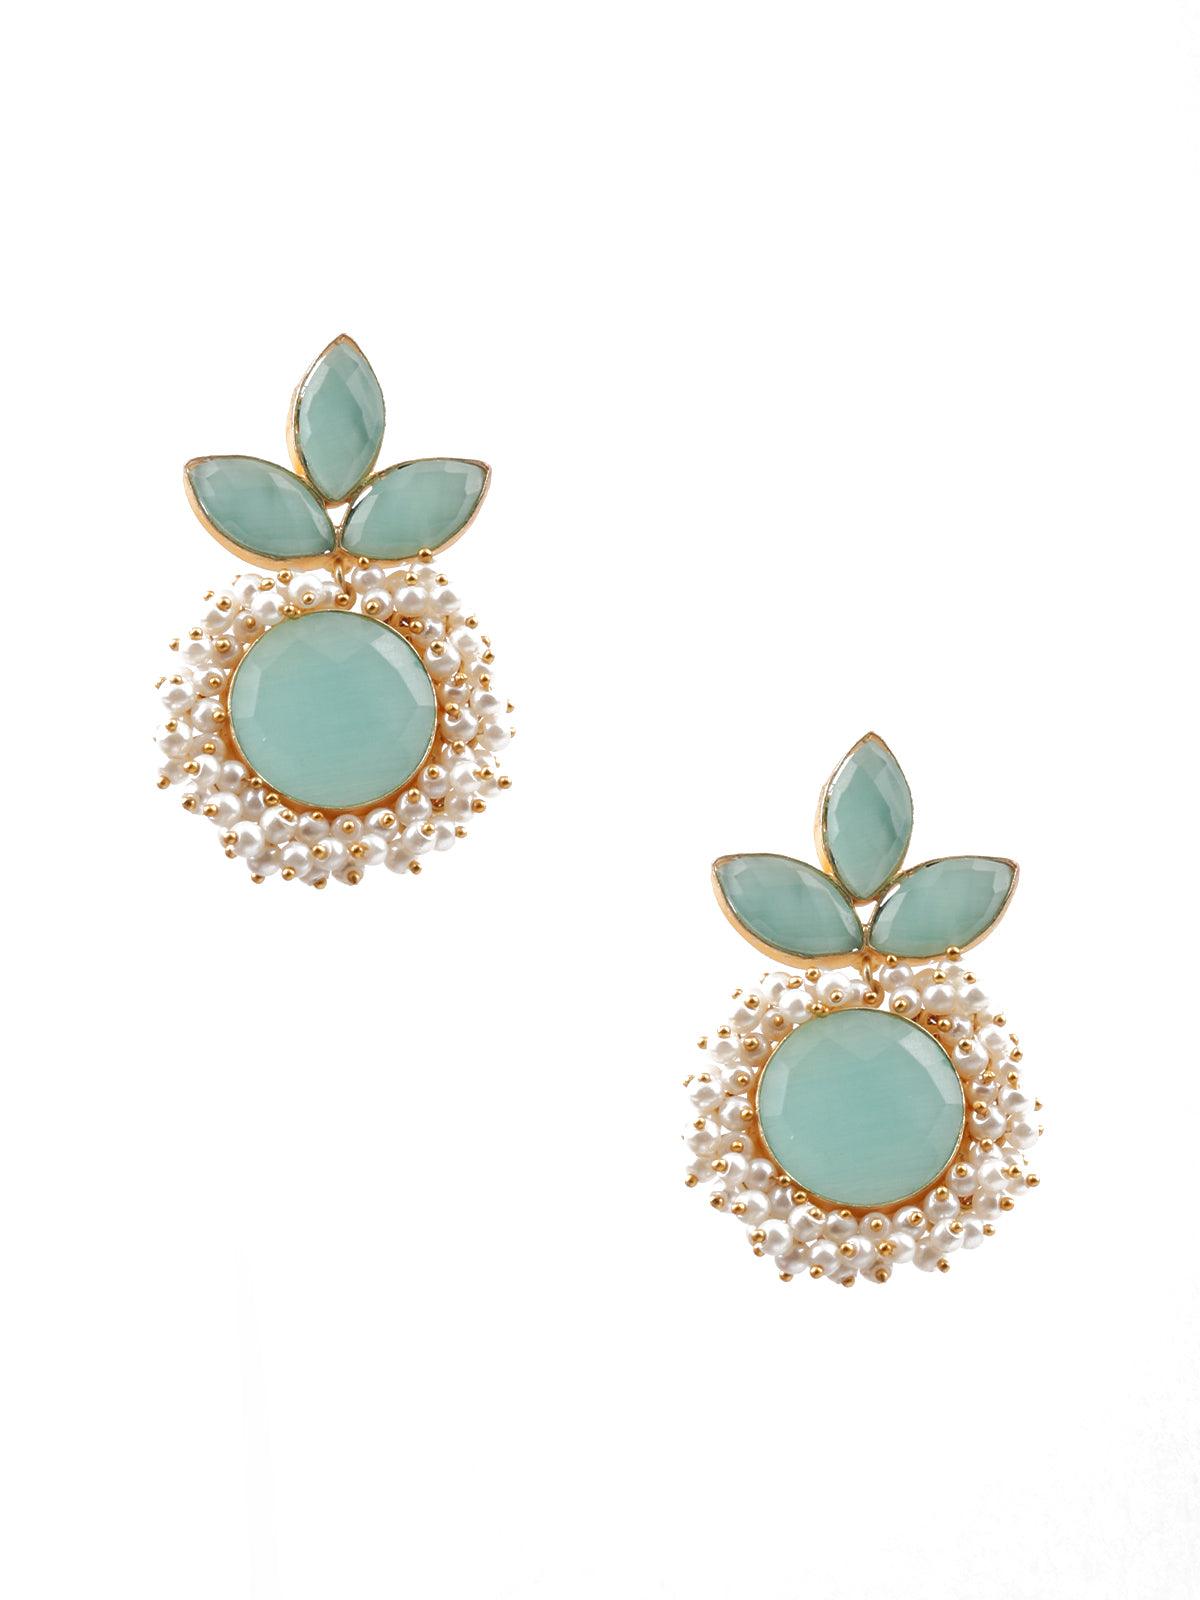 Floral stunning light blue statement earrings - Odette